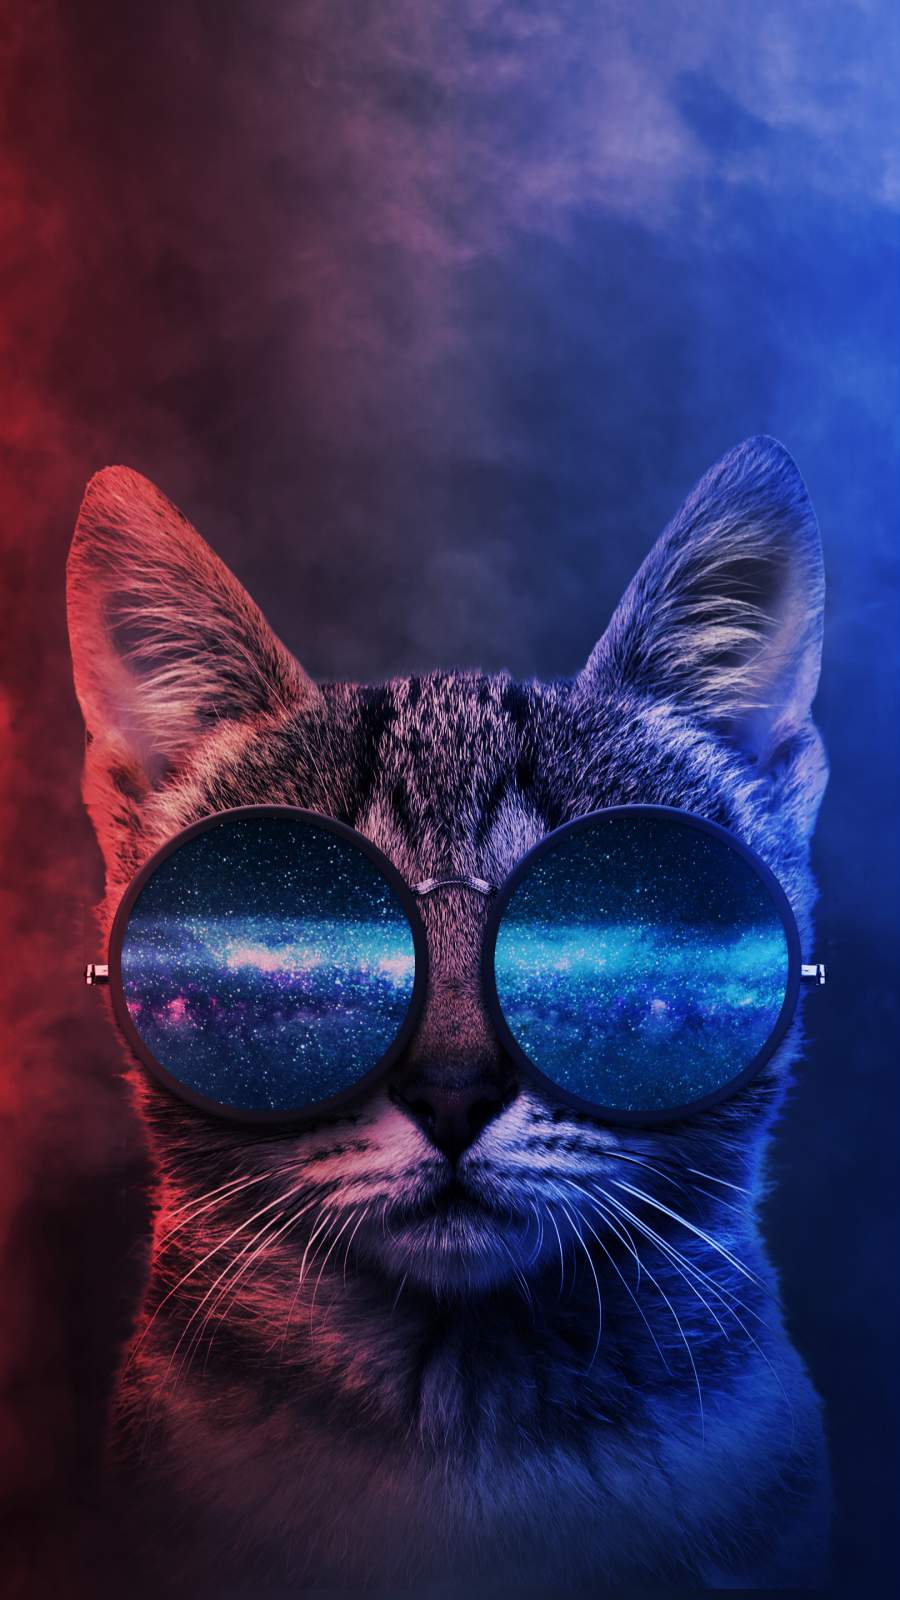 Cool Cat IPhone Wallpaper Wallpaper, iPhone Wallpaper